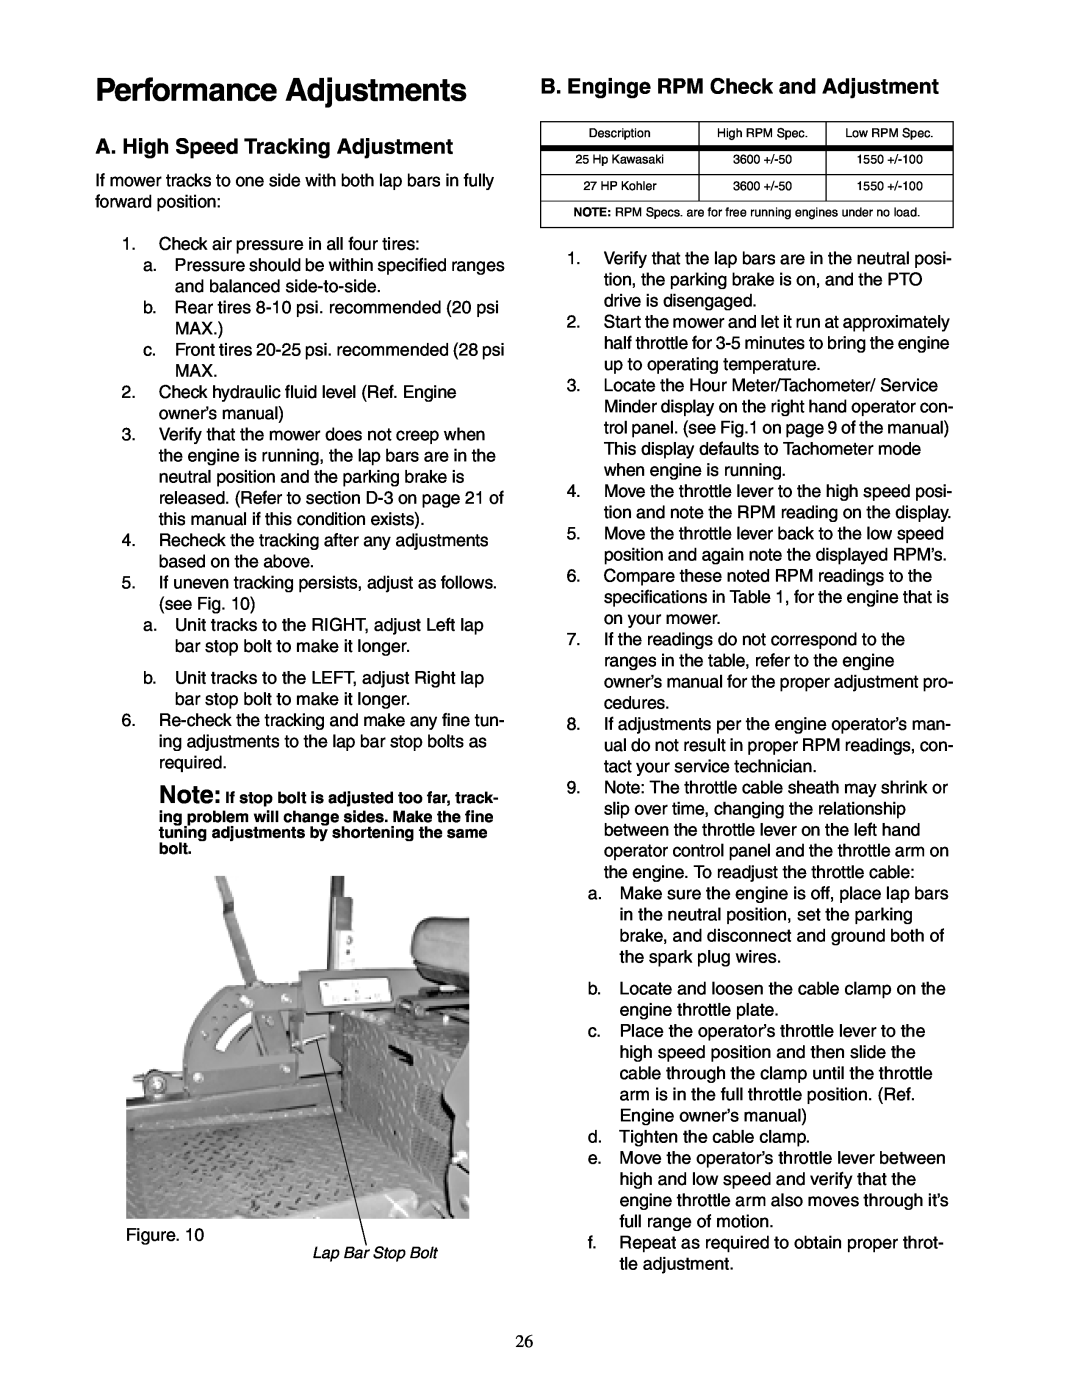 Cub Cadet Hydrostatic Zero-Turn Commercial Riding Mower Professional Turf Equipment service manual Performance Adjustments 